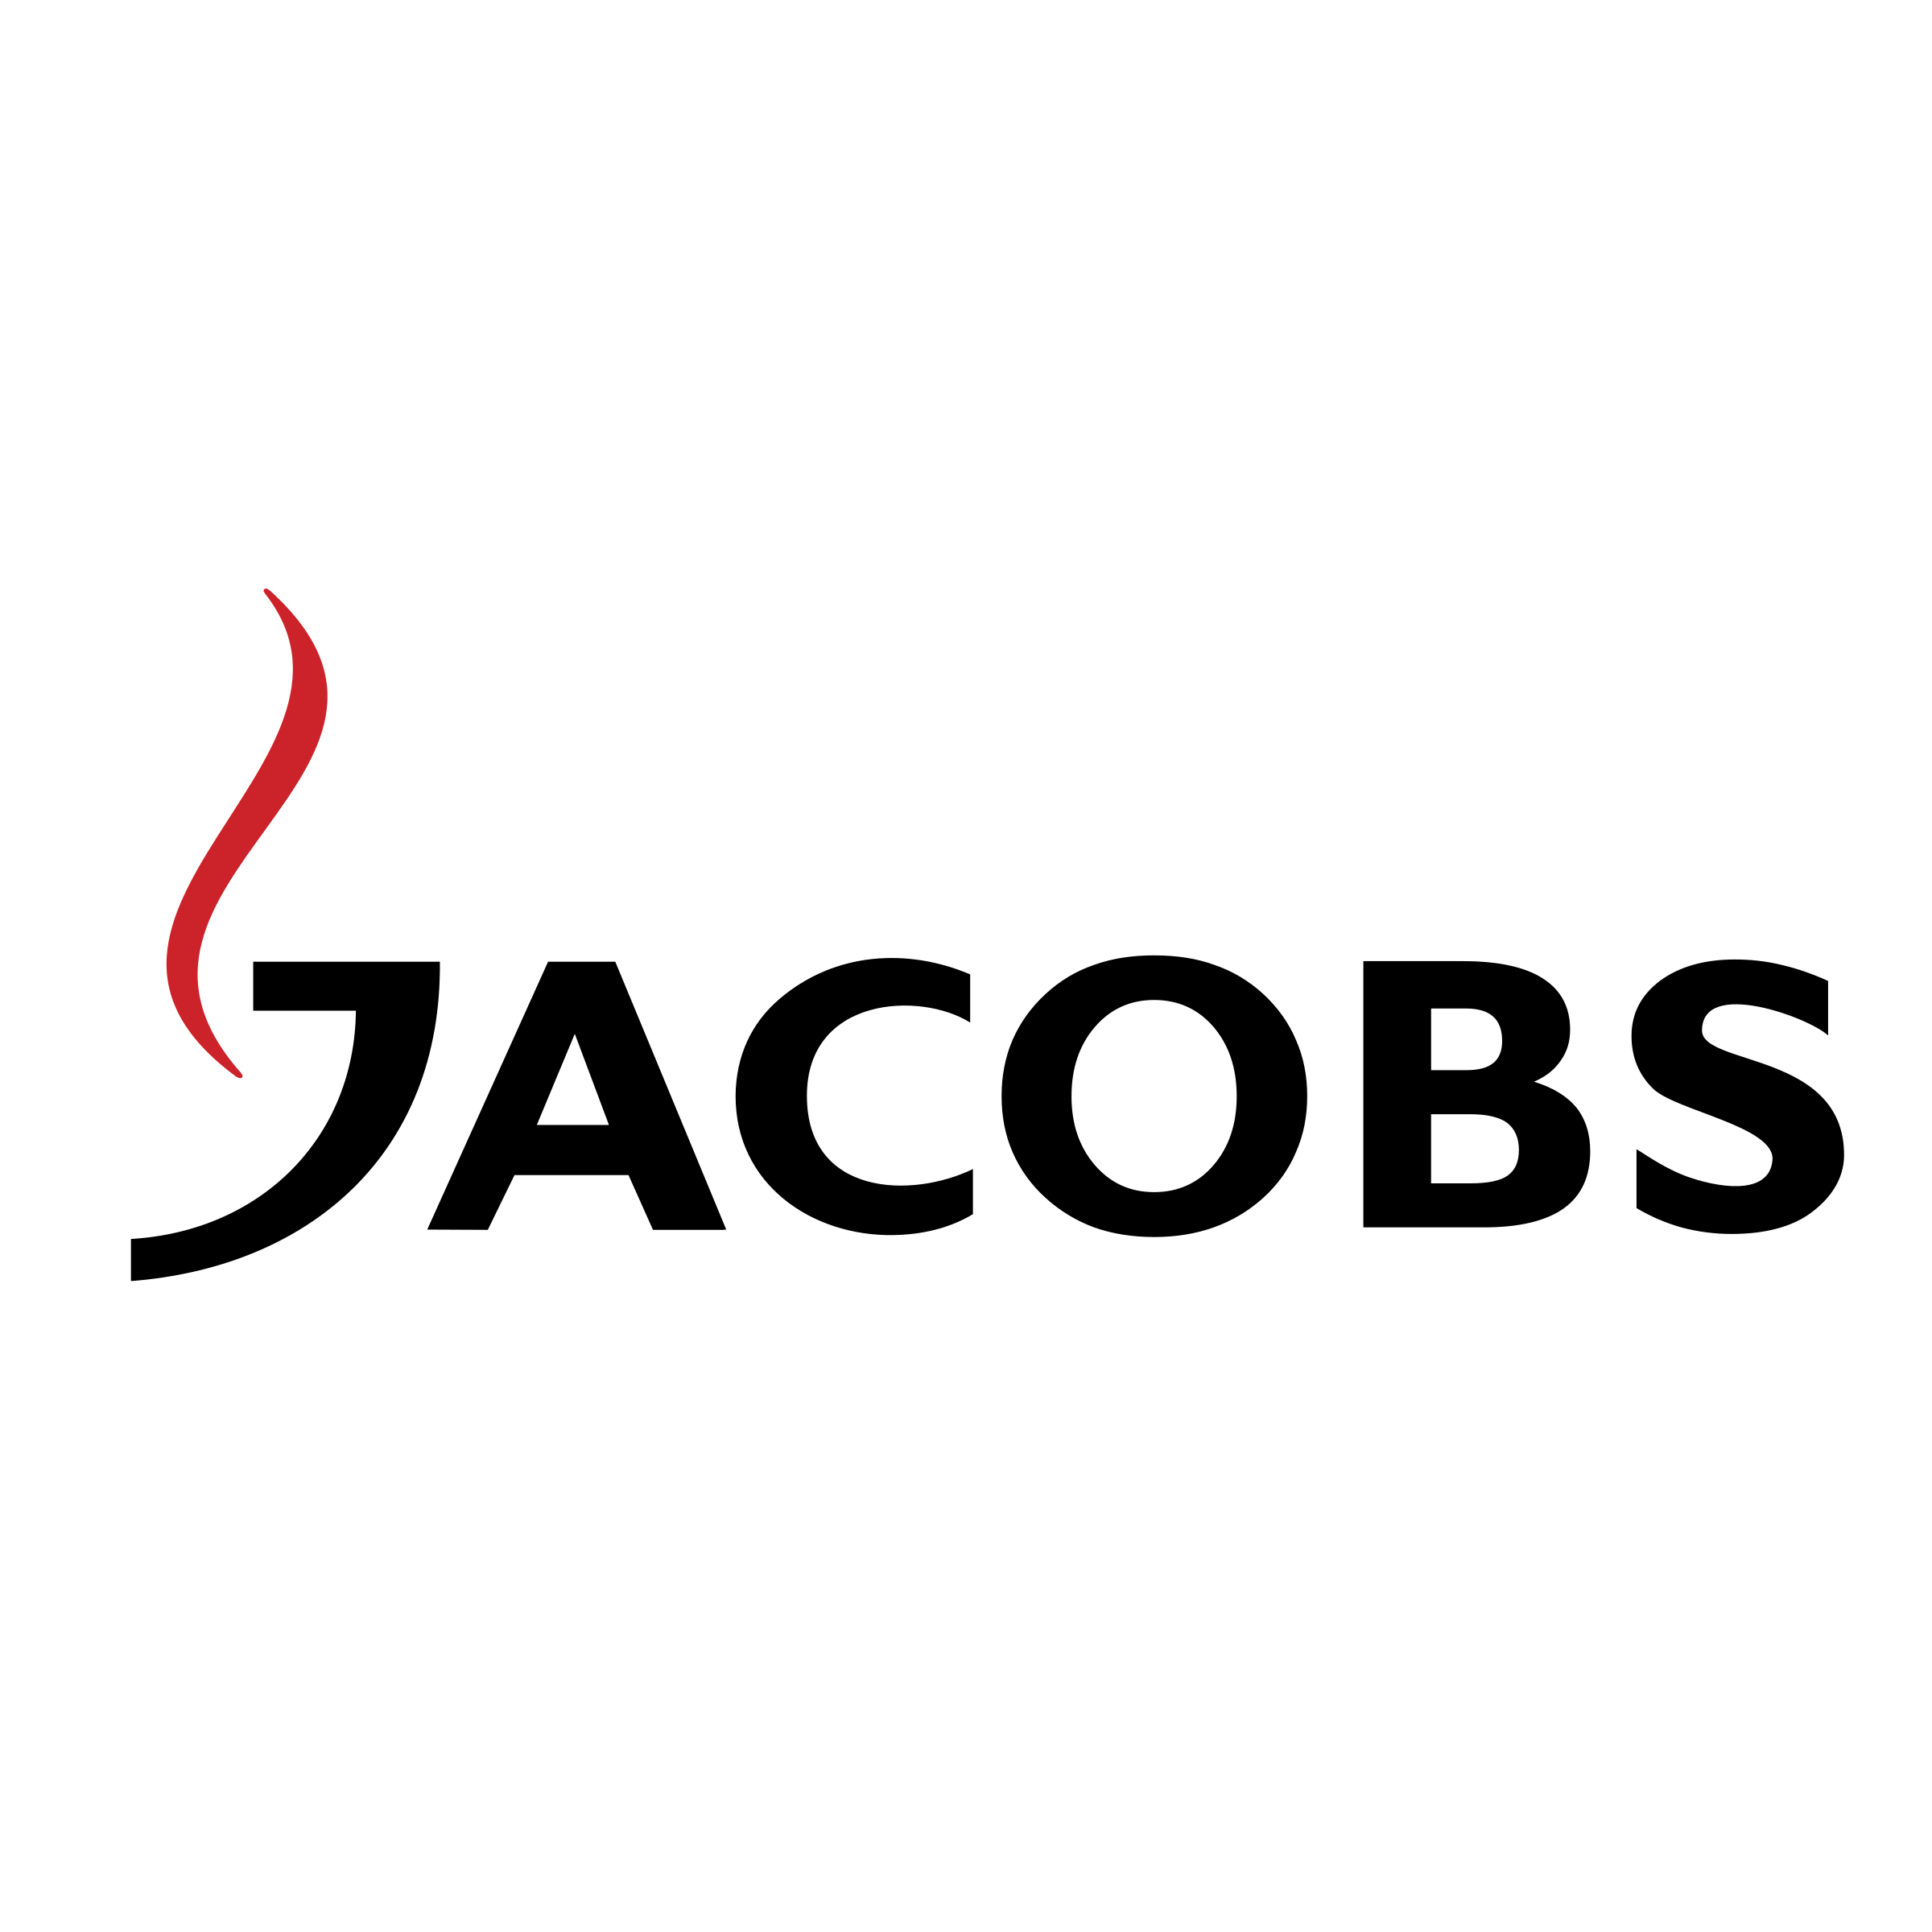 Jacobs Logo - Jacobs Logo PNG Transparent & SVG Vector - Freebie Supply